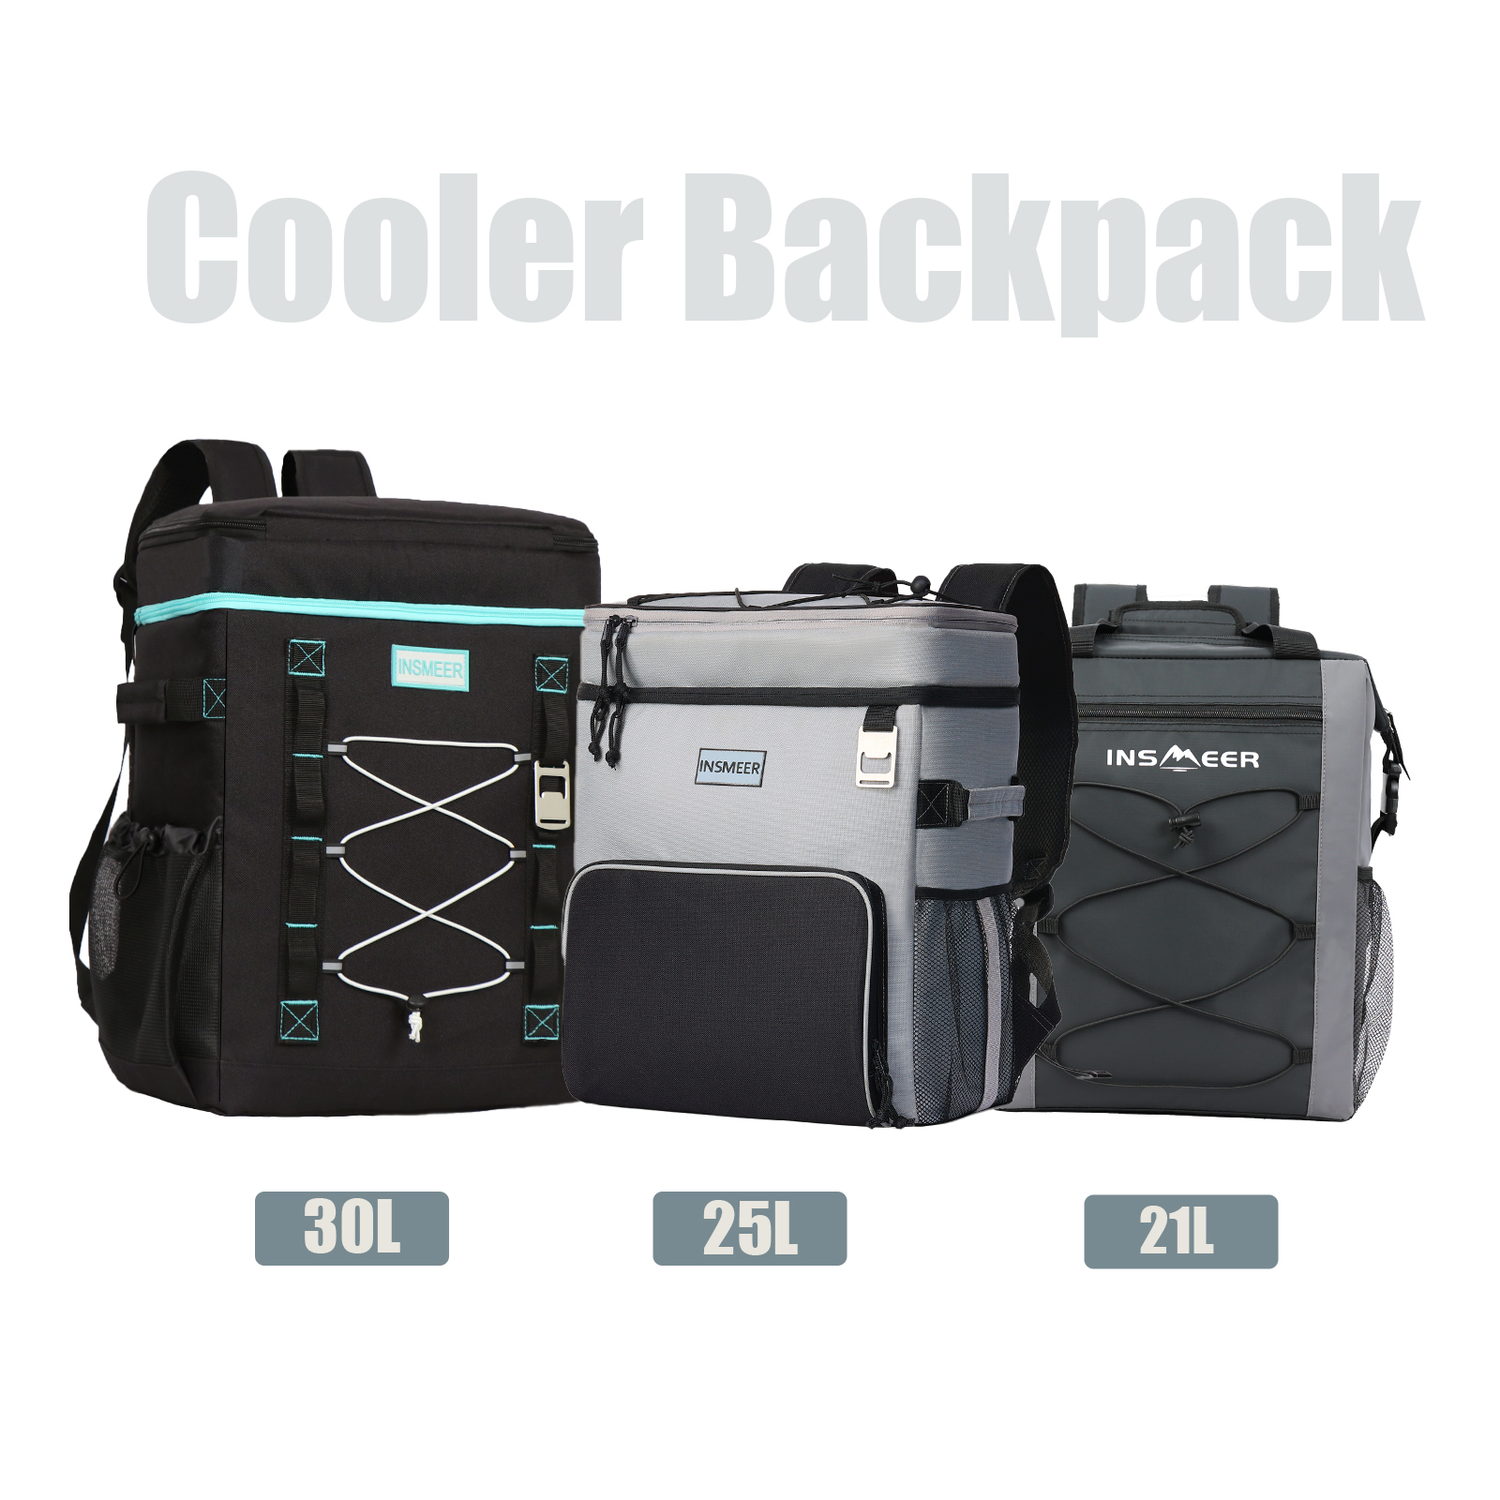 INSMEER Cooler bag for Outdoor